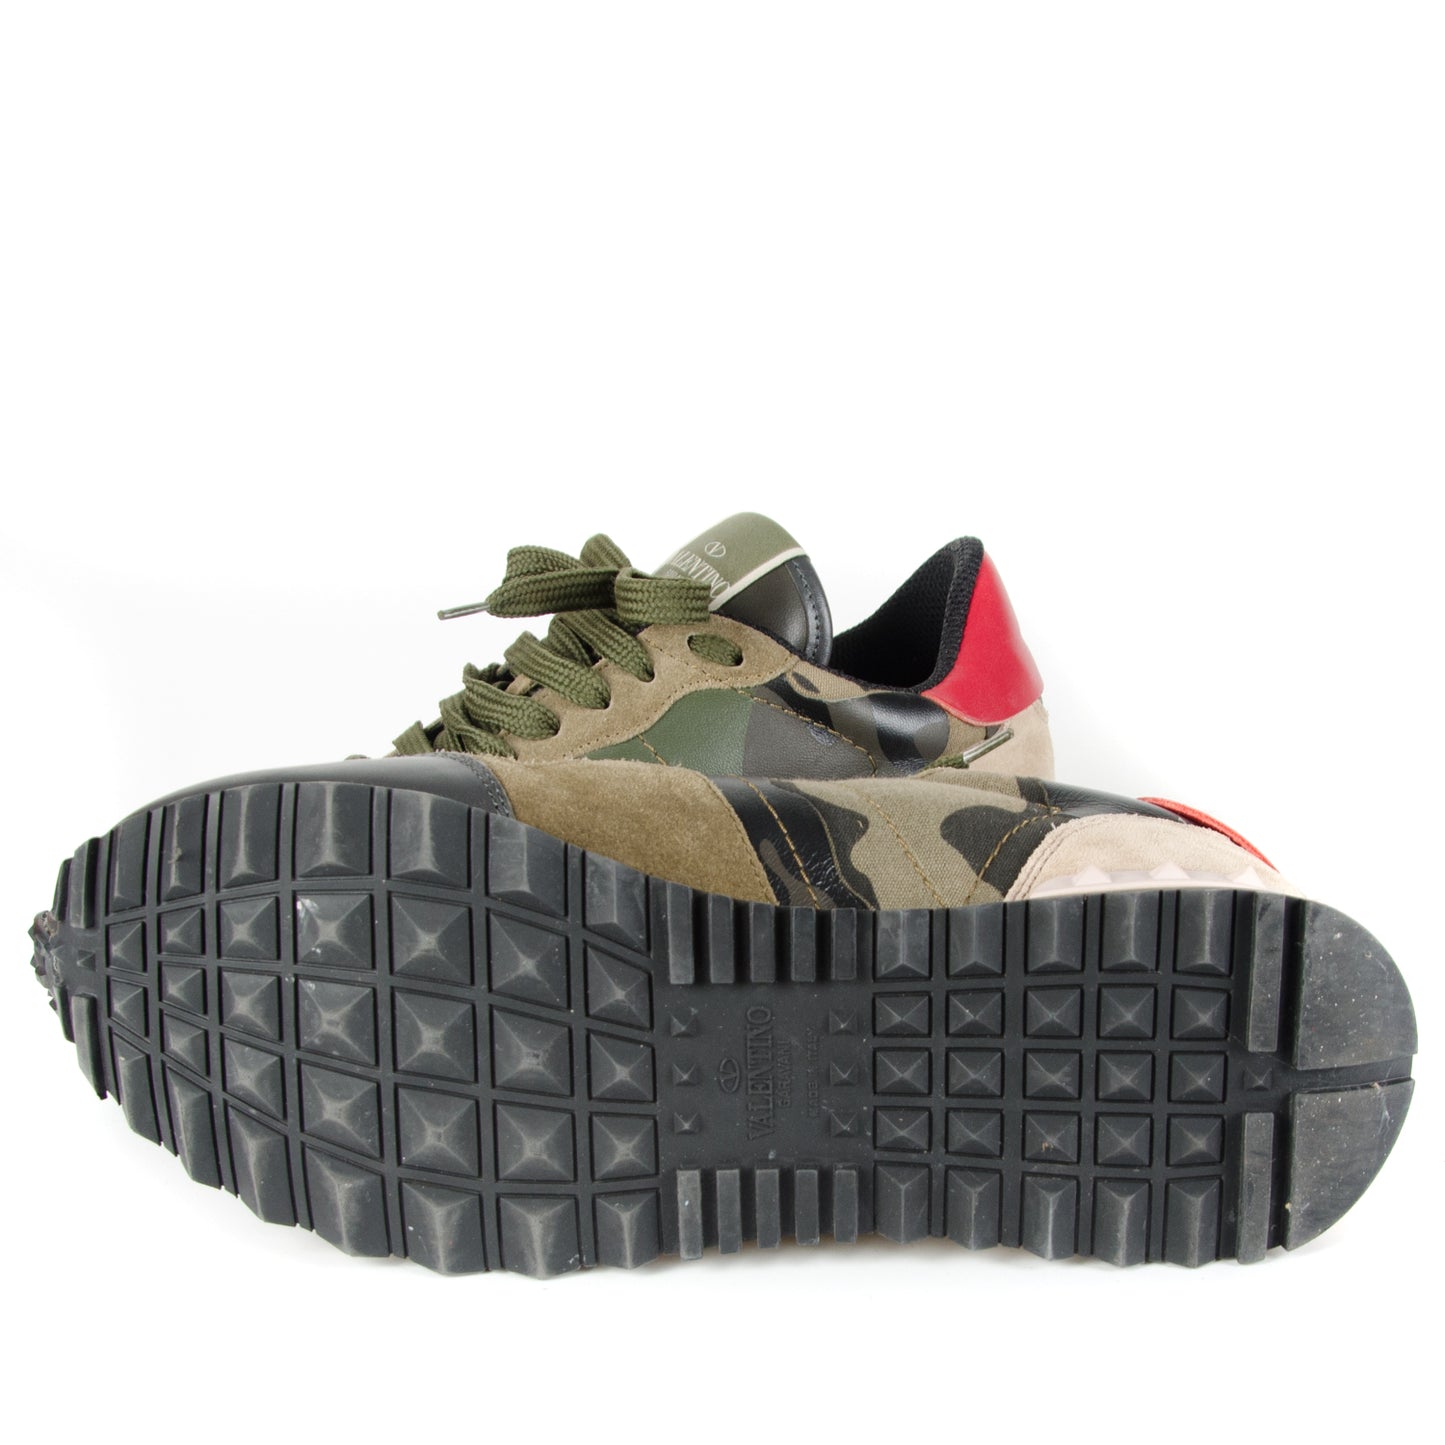 Khaki Camouflage Rock Runner Sneakers